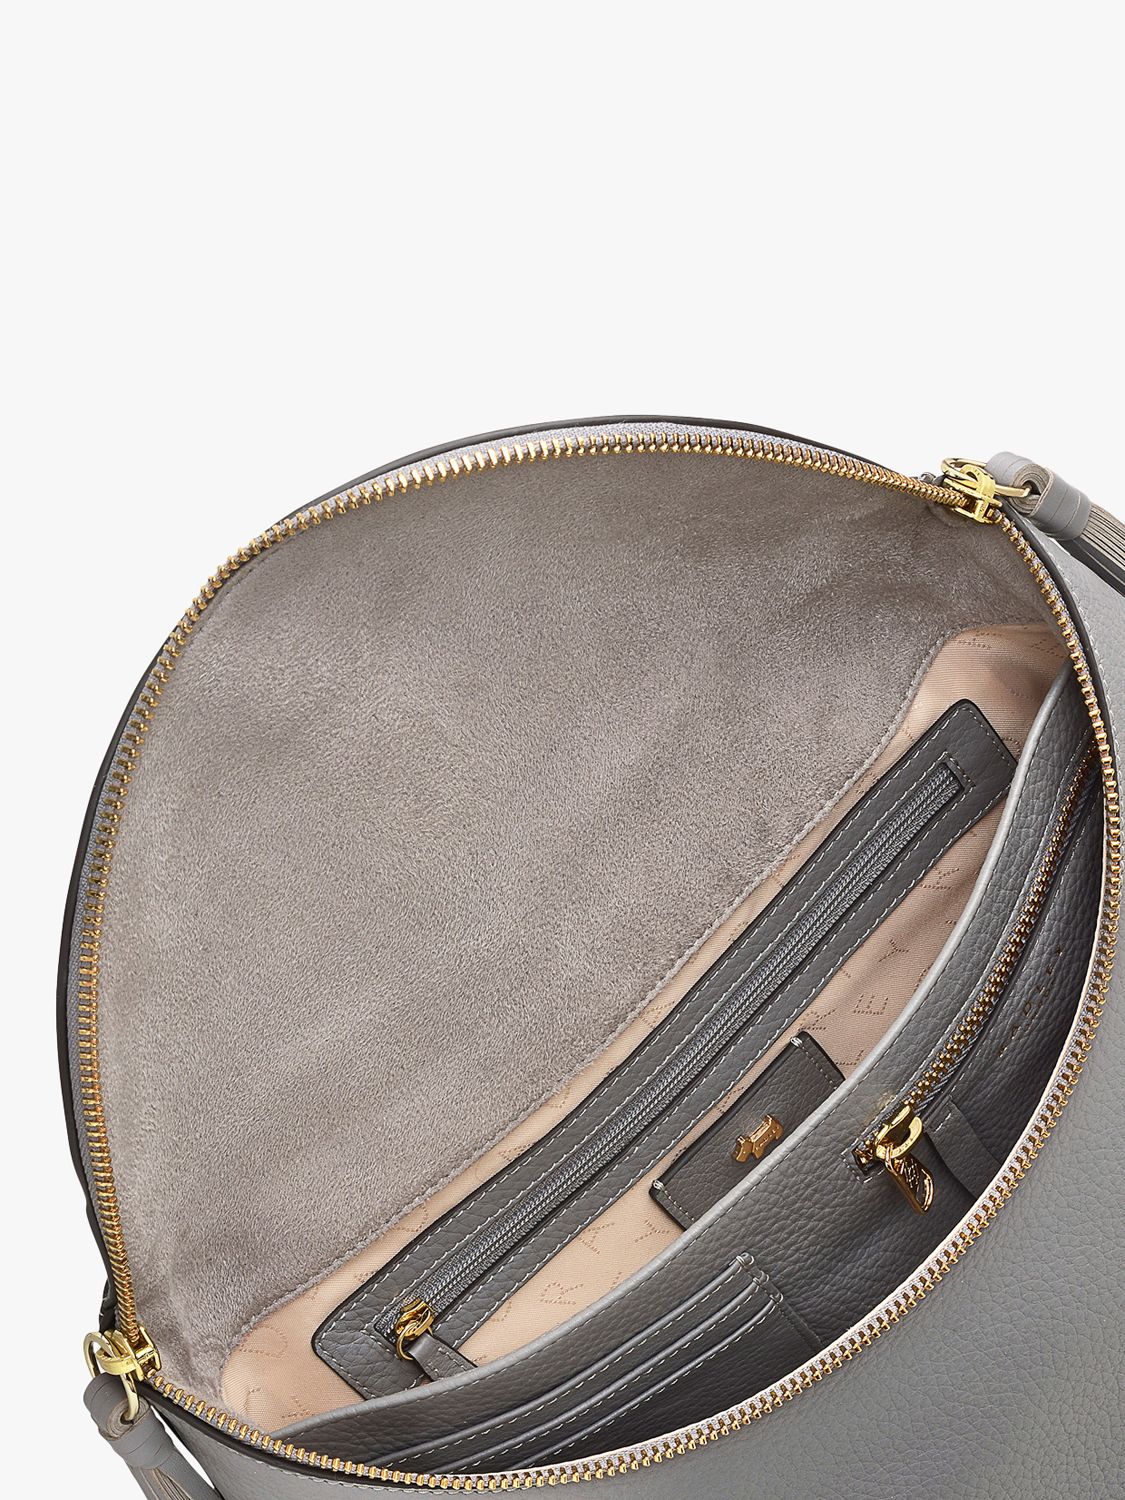 Radley Milligan Street Medium Zip Backpack, Cloud Burst, One Size